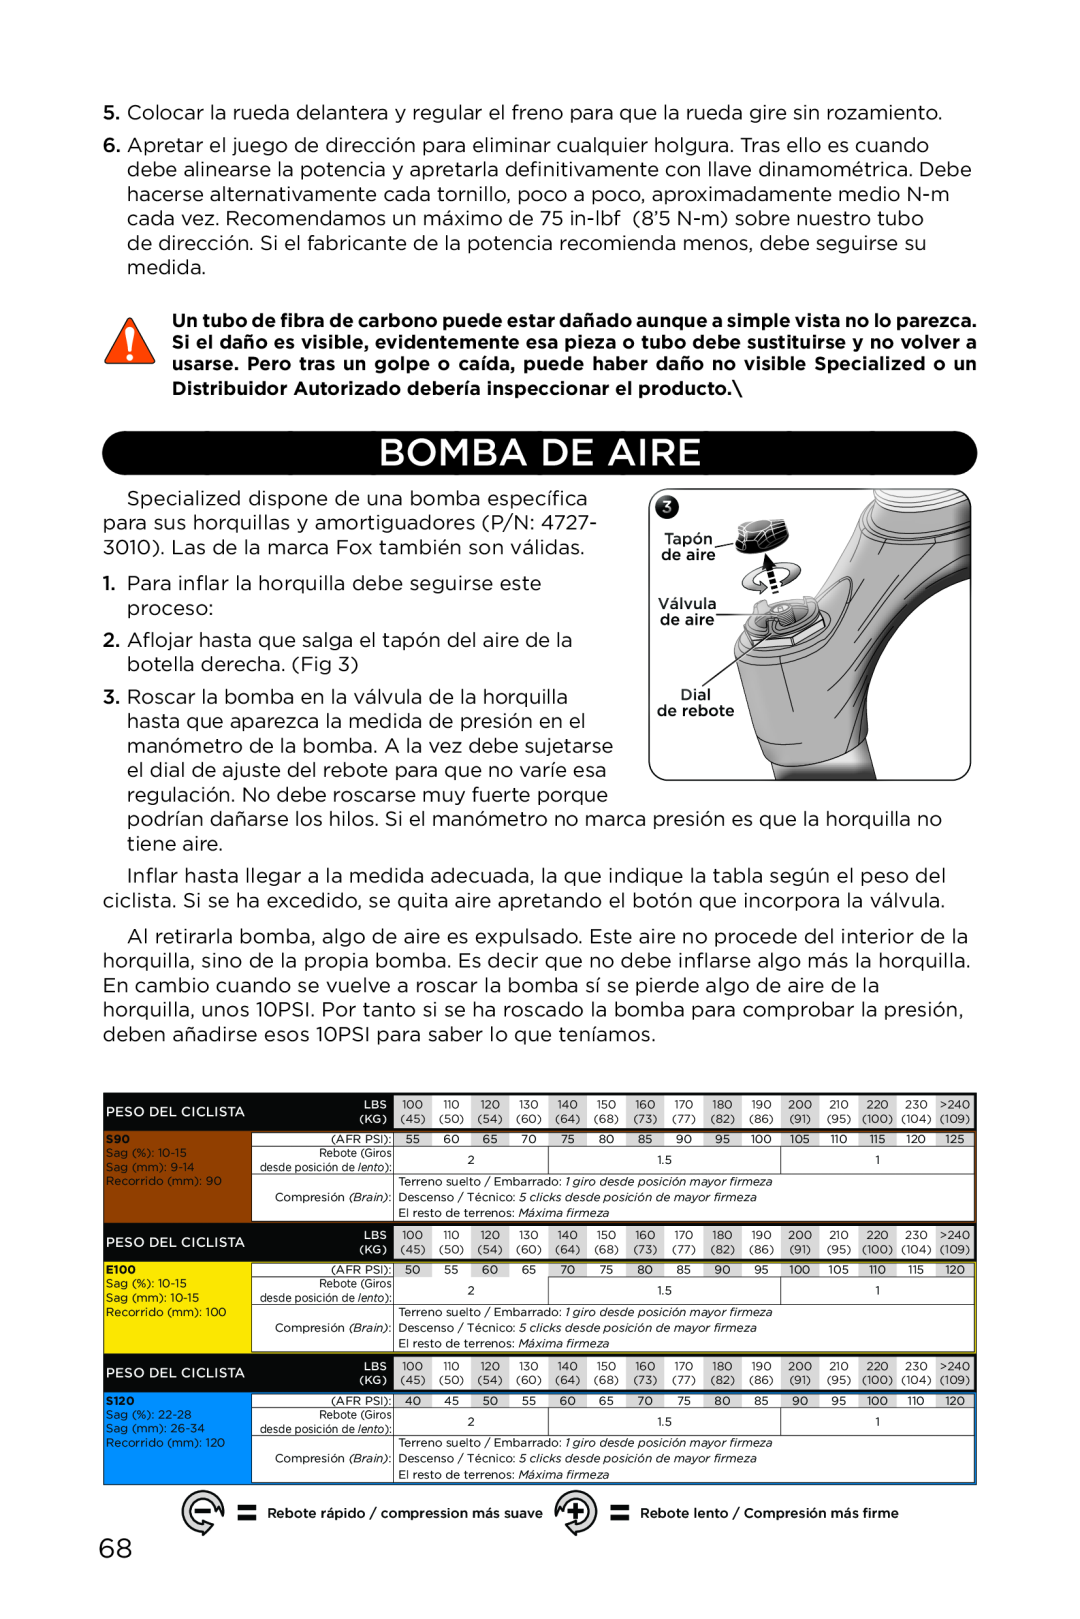 Specialized AFR S90, AFR E100, AFR S120 manual Bomba De Aire 